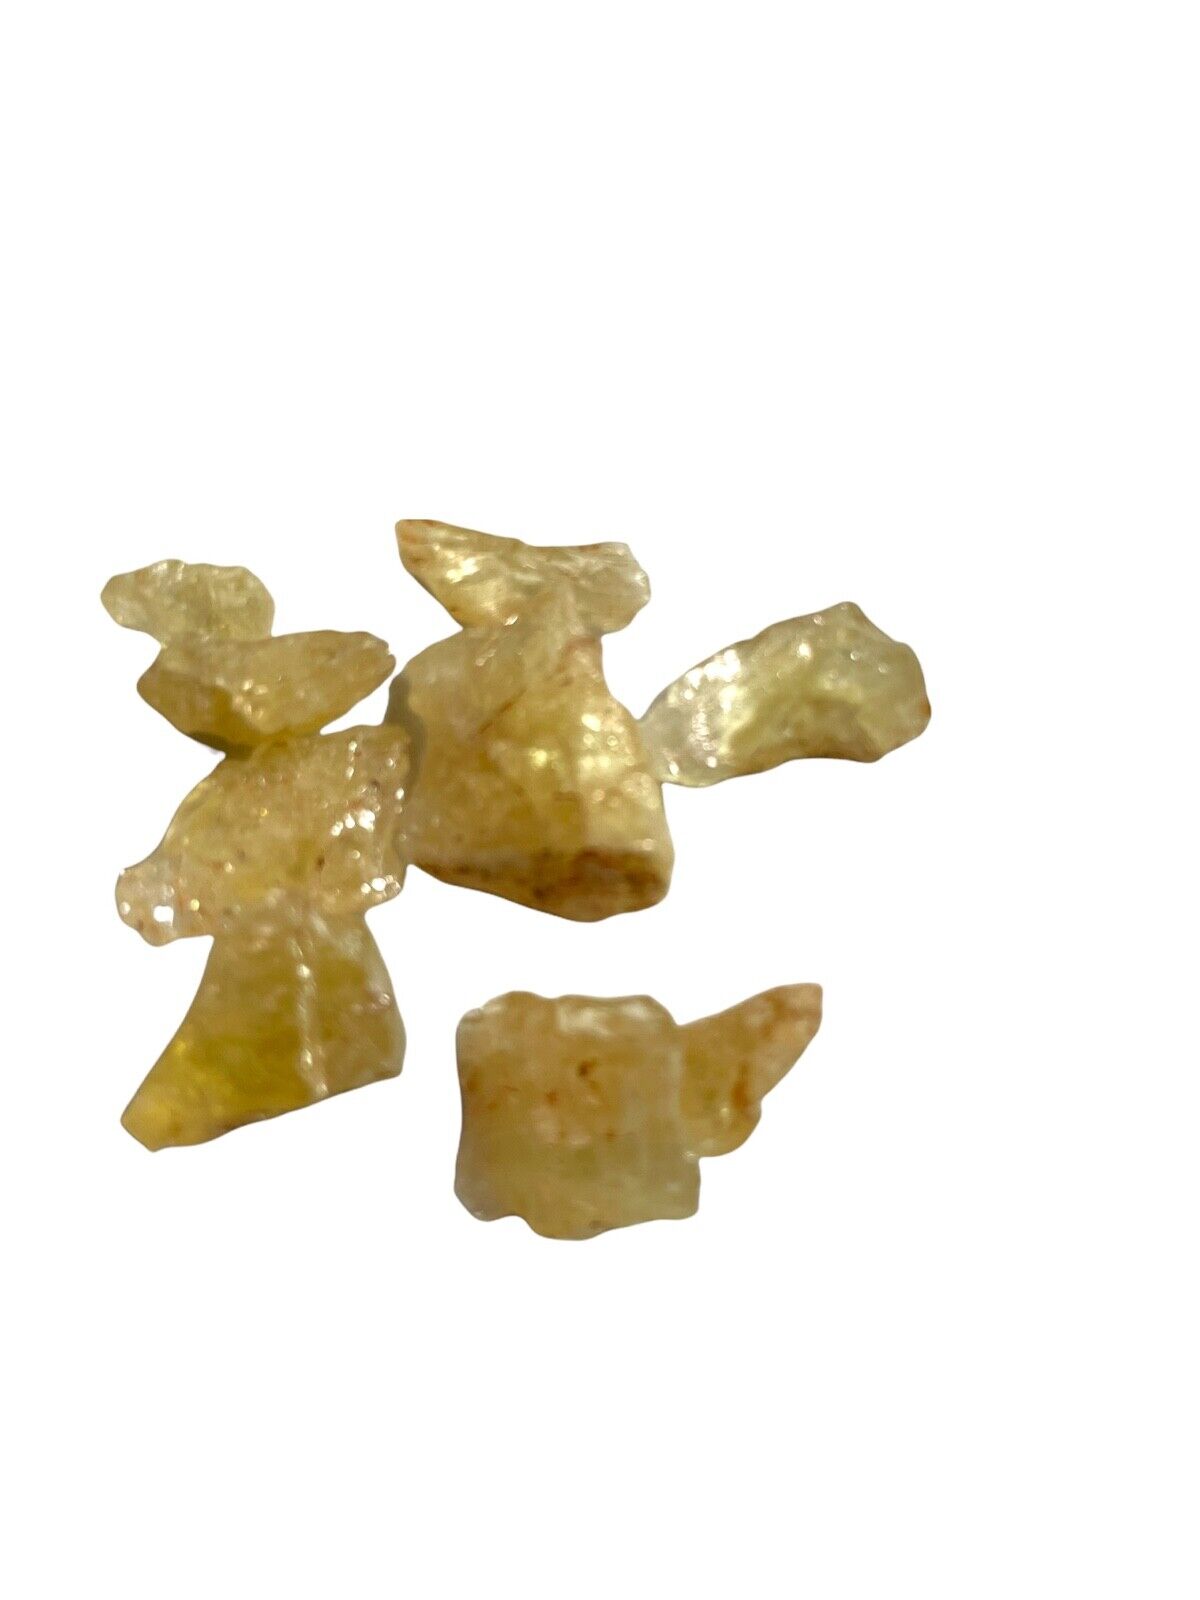 Gold Danburite Chips  Tanzania 9 grams 5-20mm Very Small Reiki Healing Crystals 